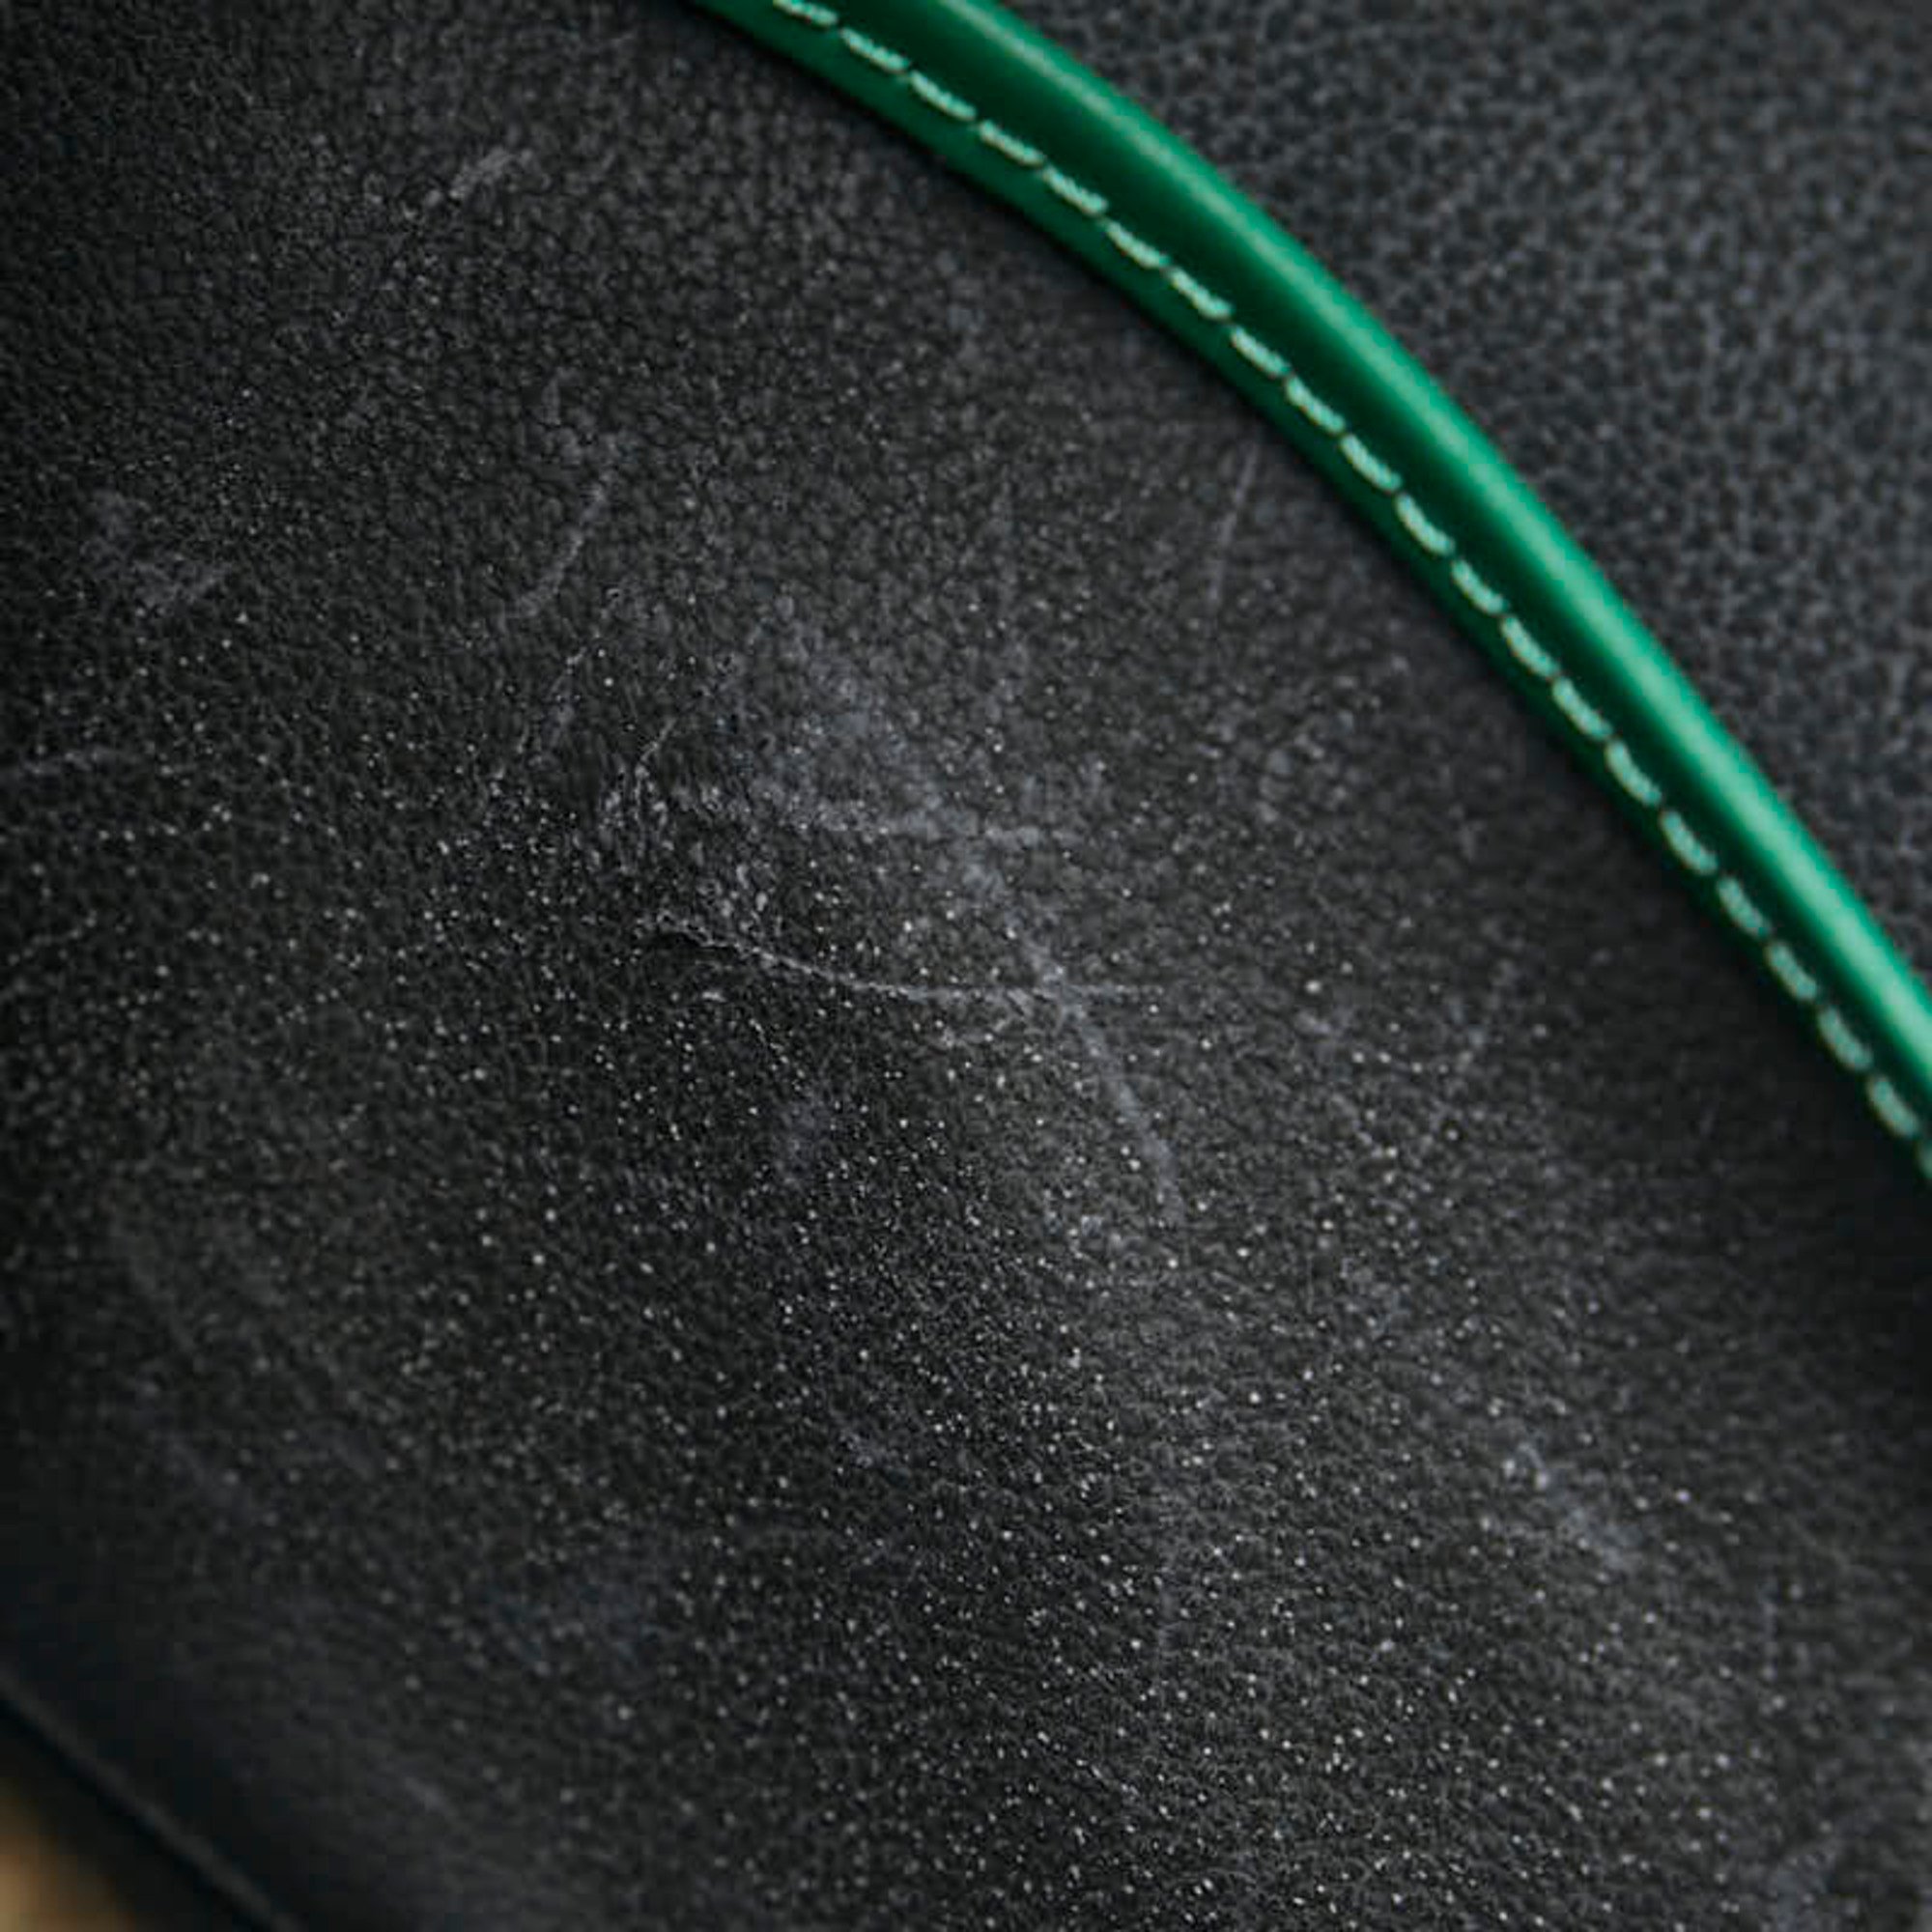 Louis Vuitton Epi Riviera Handbag M48184 Borneo Green Leather Women's LOUIS VUITTON